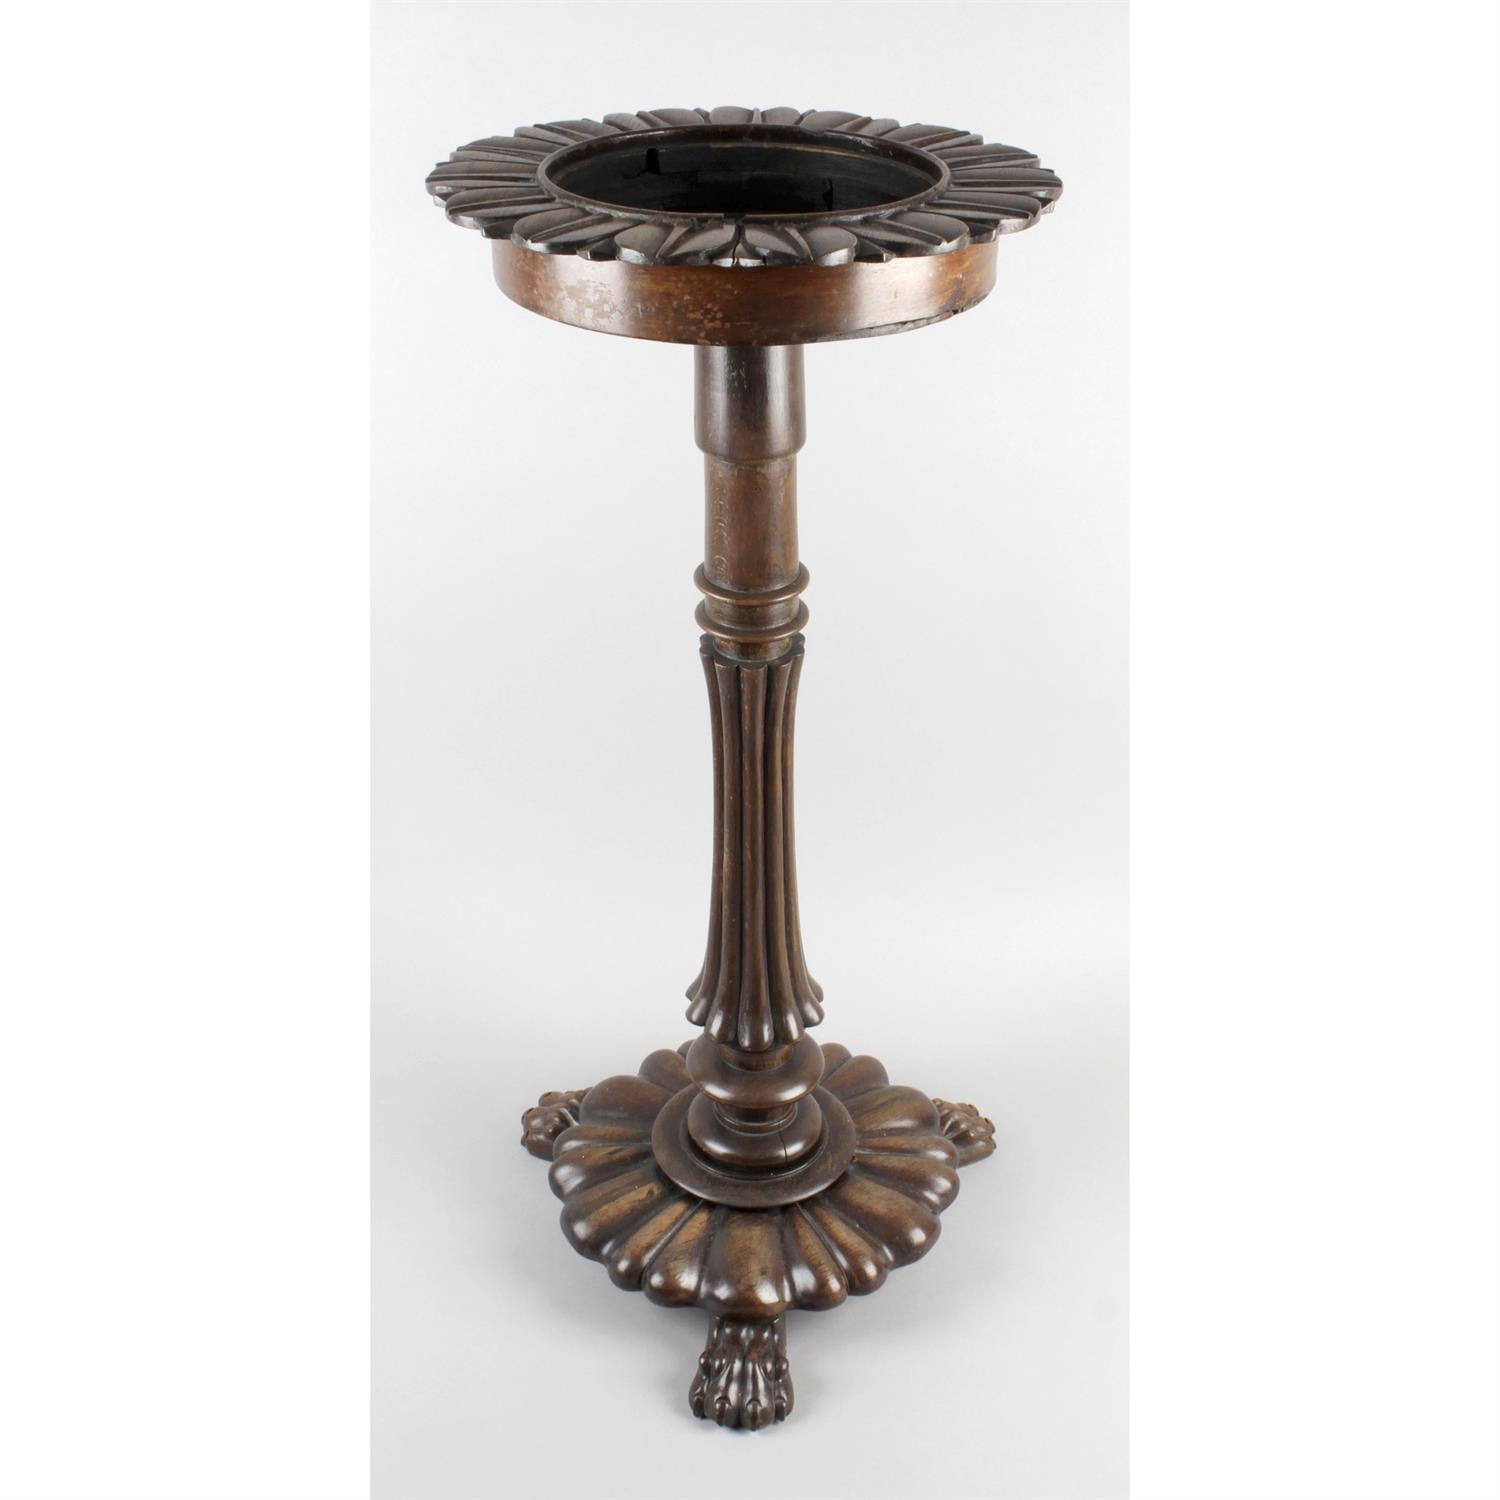 A 19th century mahogany pedestal table.